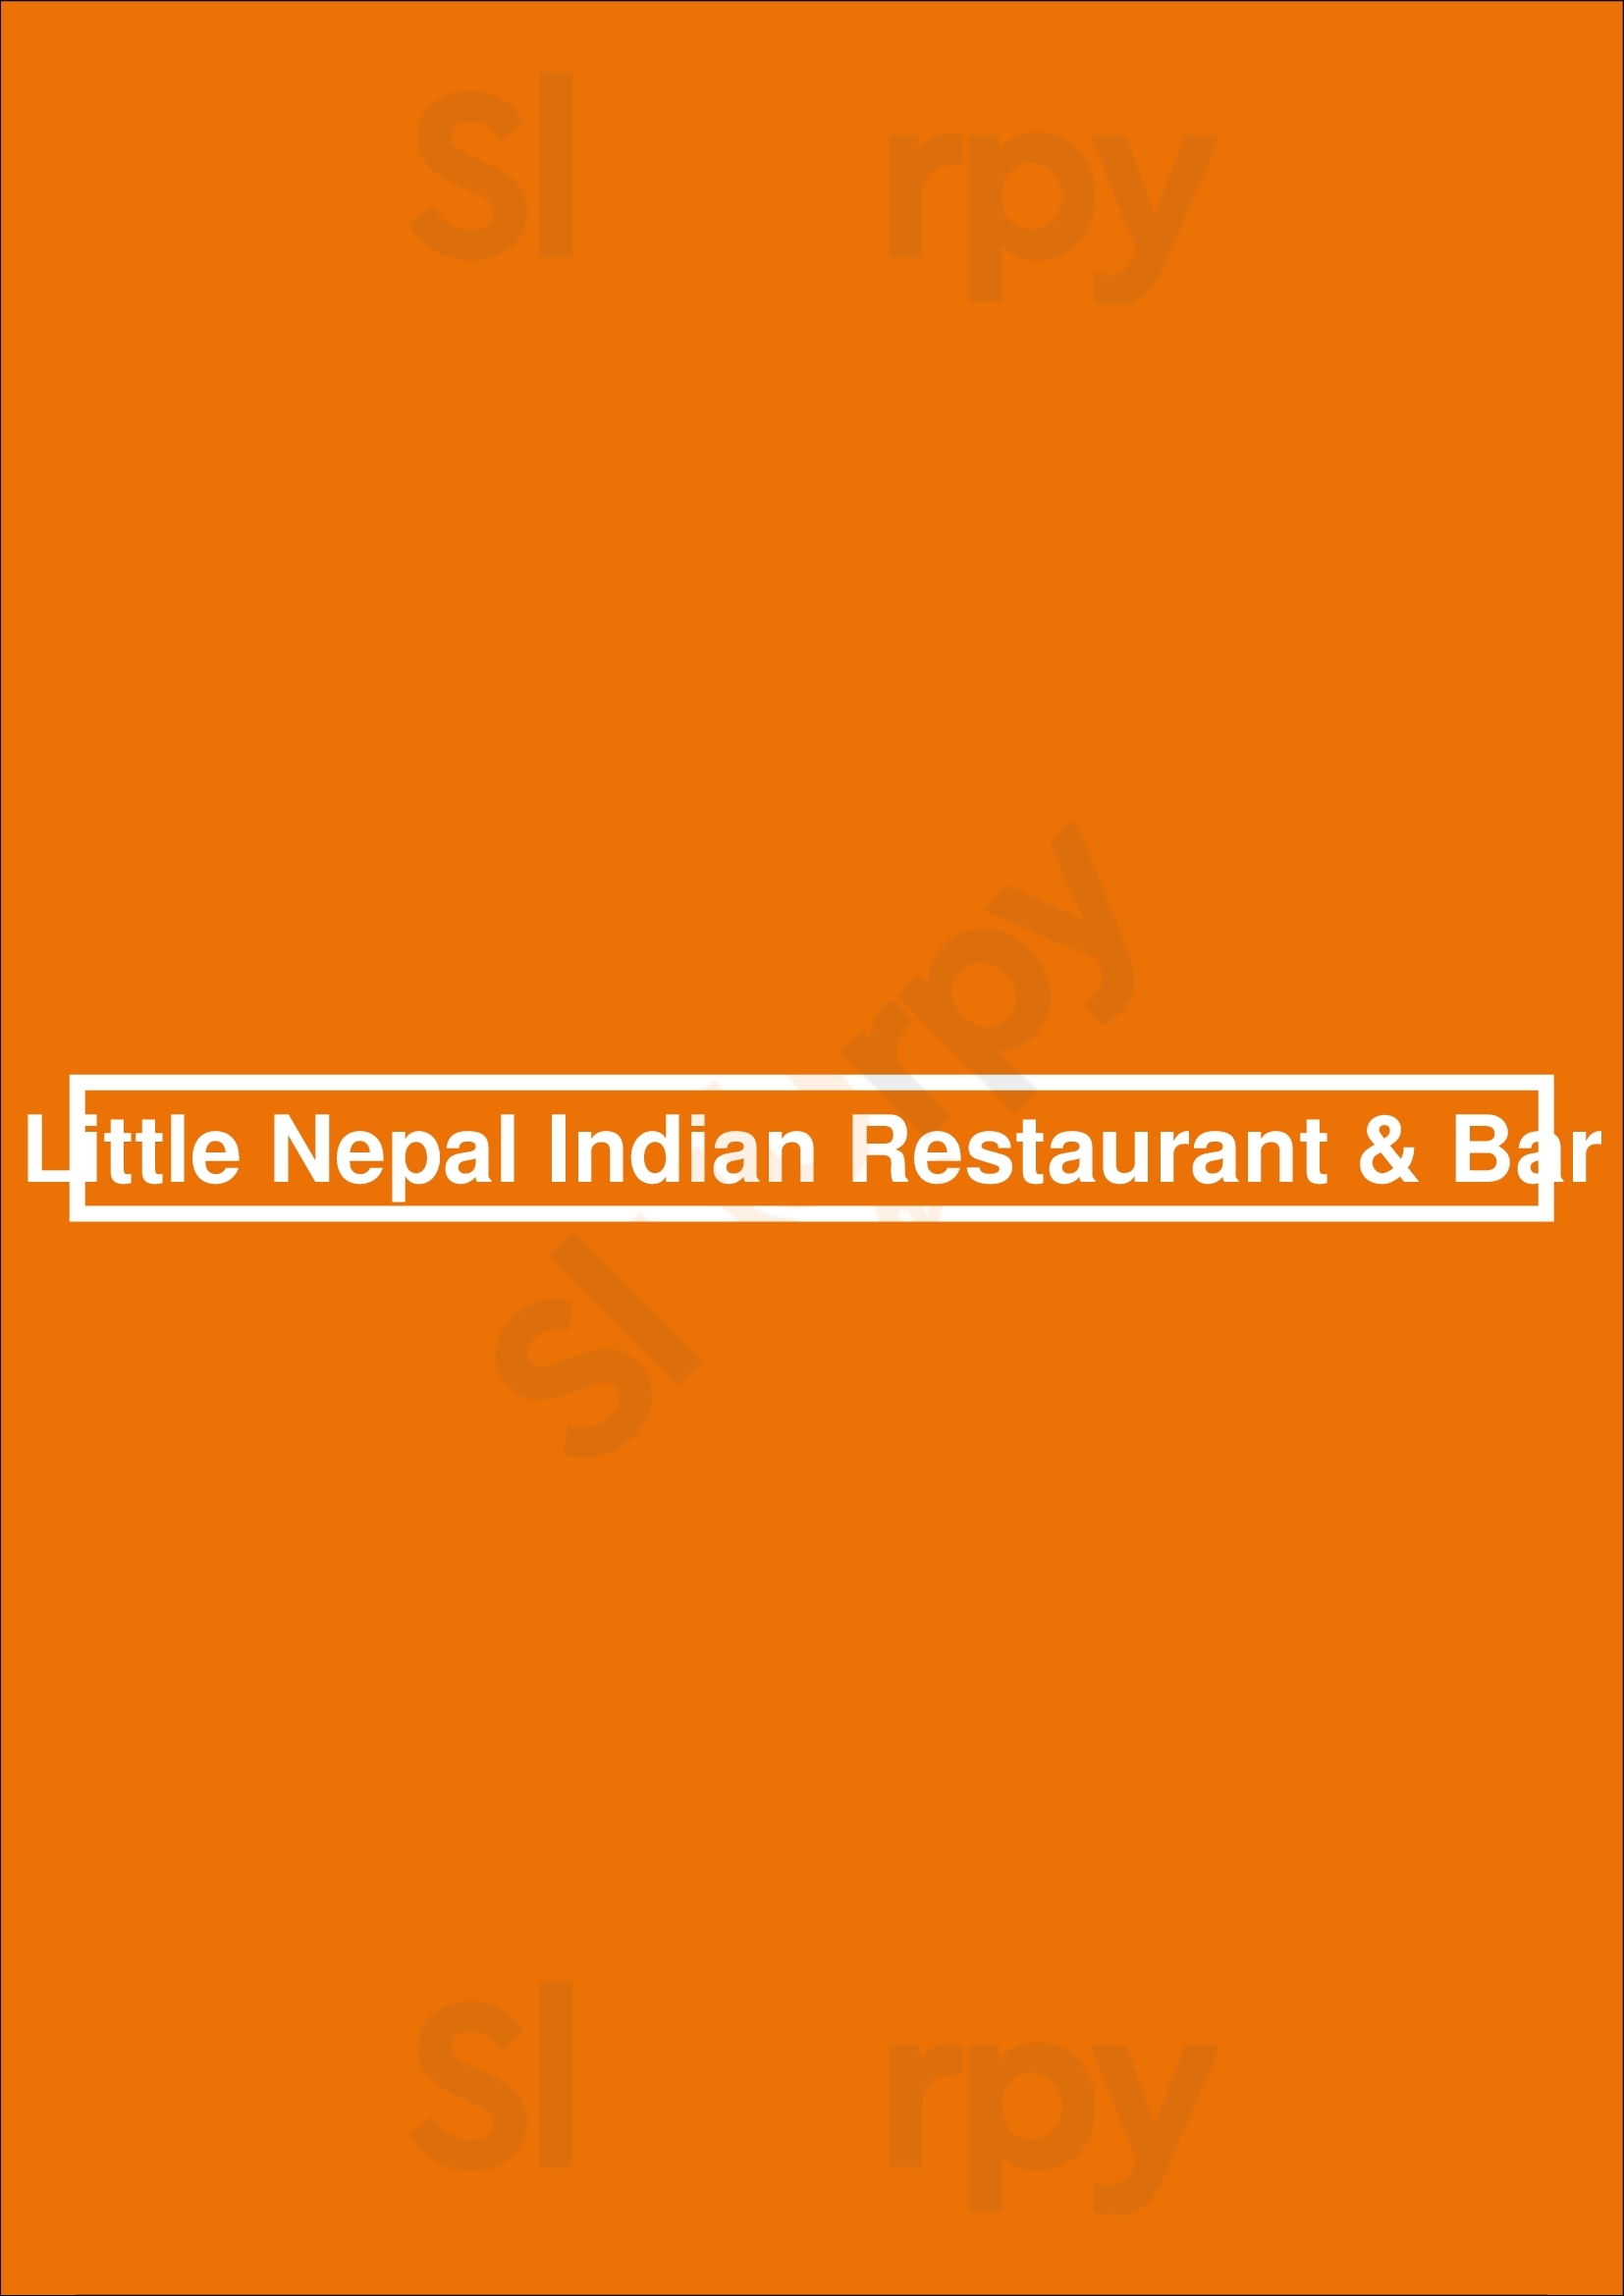 Little Nepal Indian Restaurant & Bar Colorado Springs Menu - 1